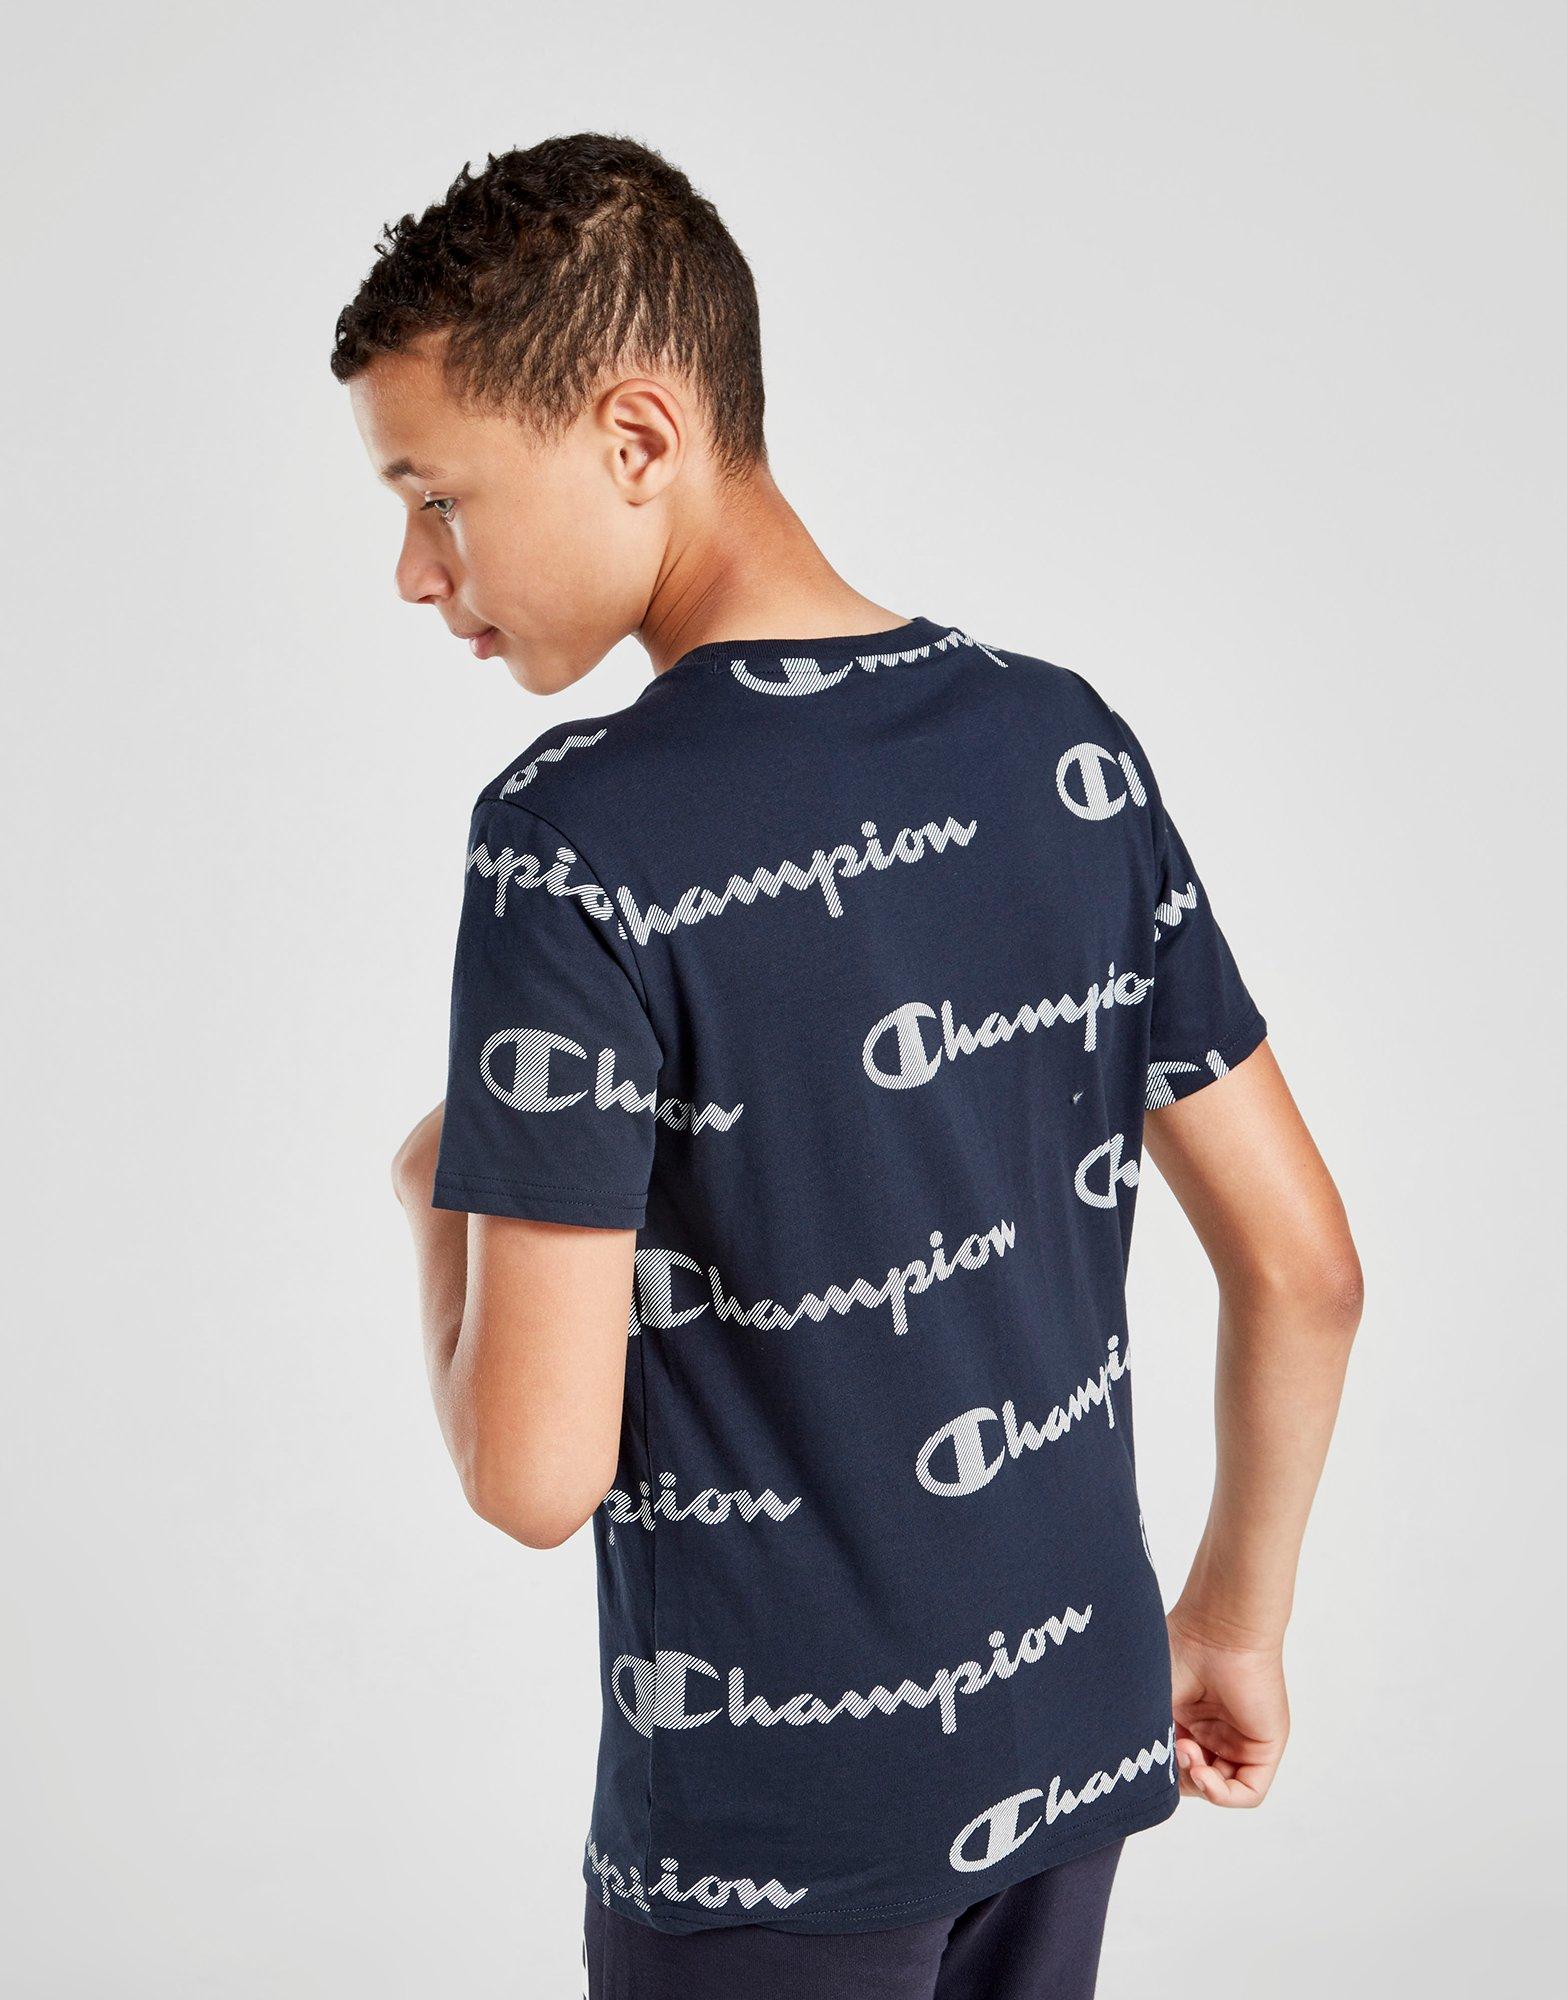 champion print shirt